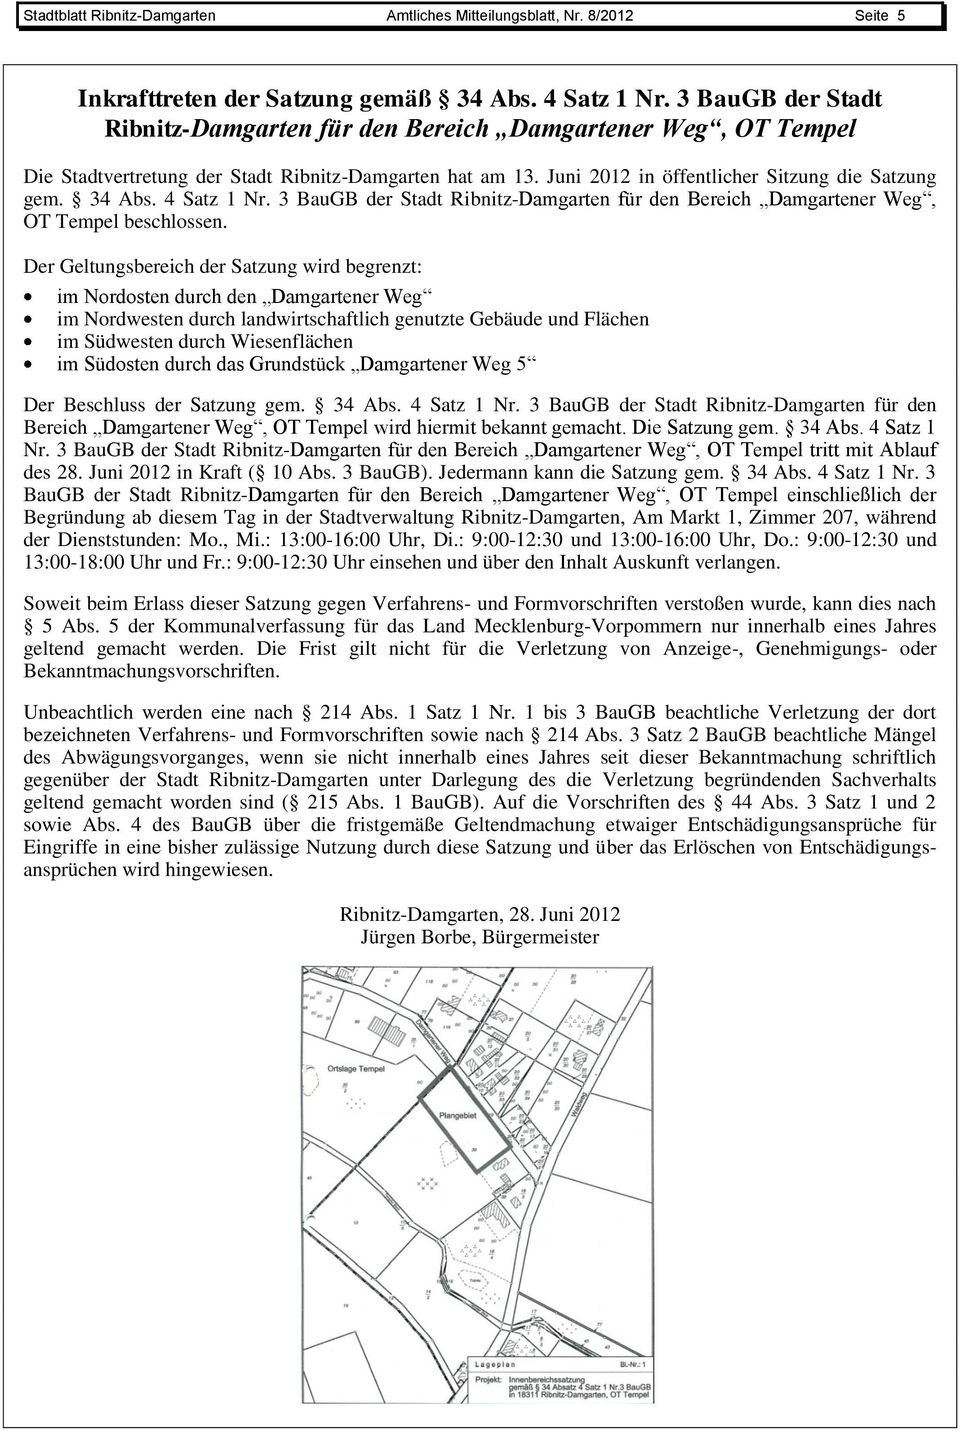 4 Satz 1 Nr. 3 BauGB der Stadt Ribnitz-Damgarten für den Bereich Damgartener Weg, OT Tempel beschlossen.